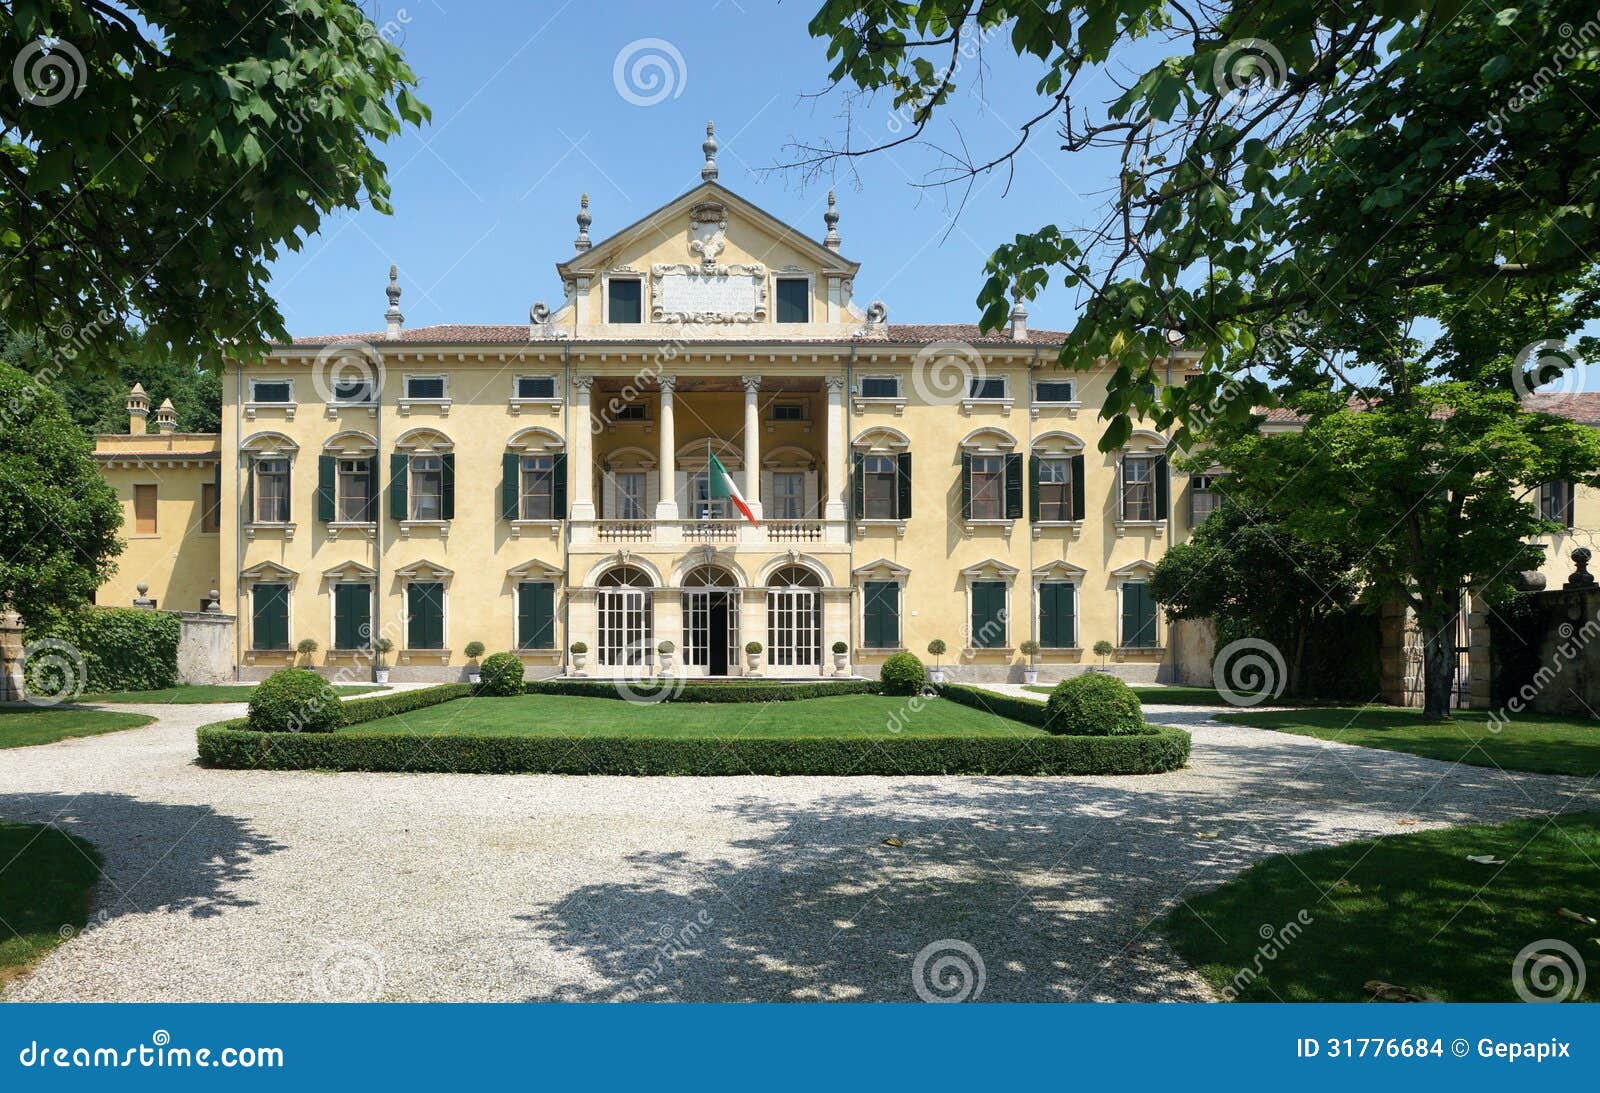 italian mansion